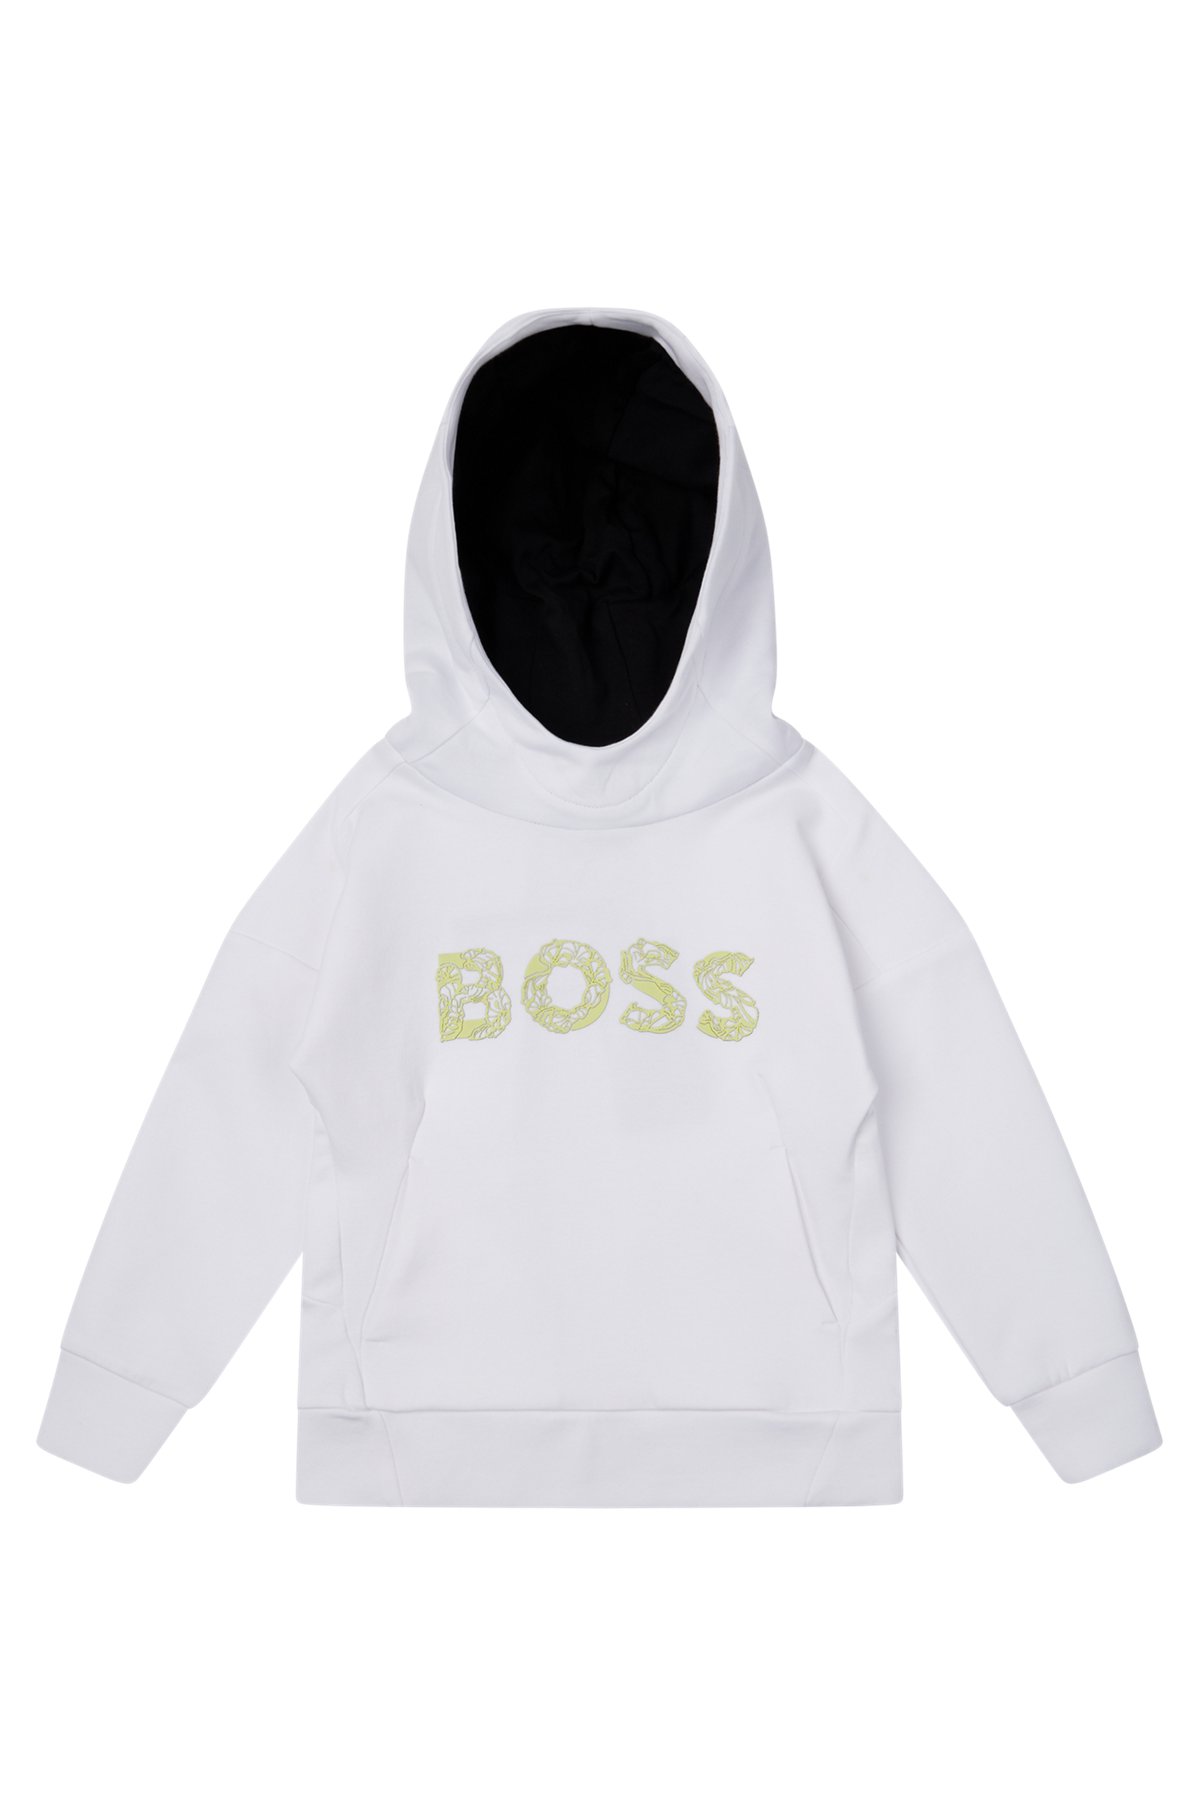 BOSS x AJBXNG Kids' cotton-blend hooded sweatshirt with exclusive logo print, White